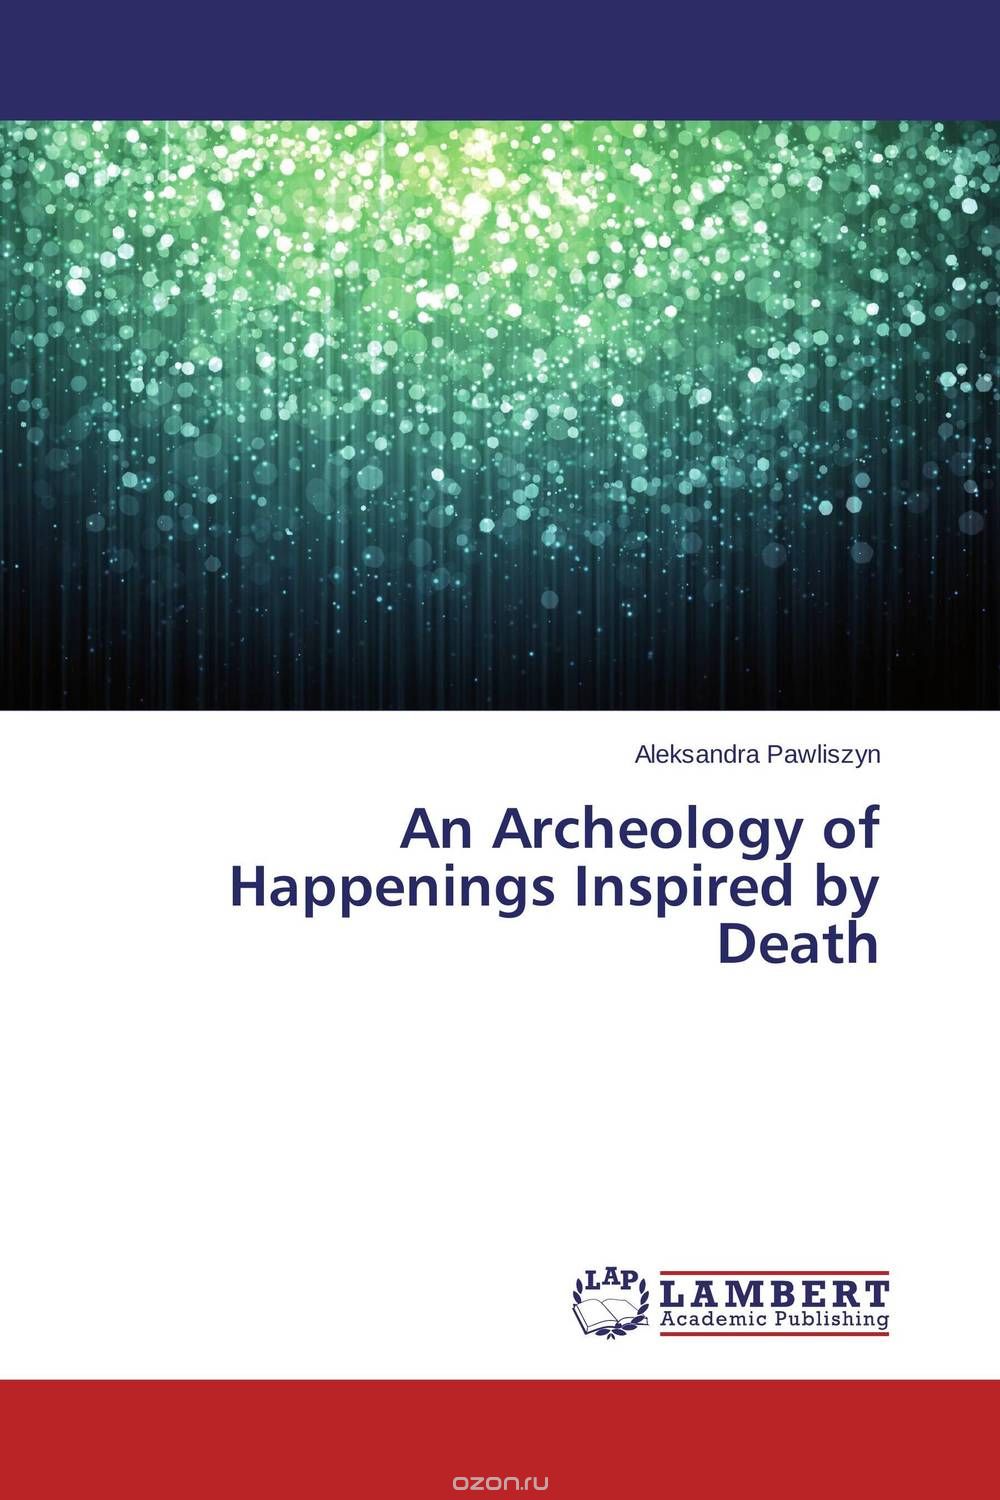 Скачать книгу "An Archeology of Happenings Inspired by Death"